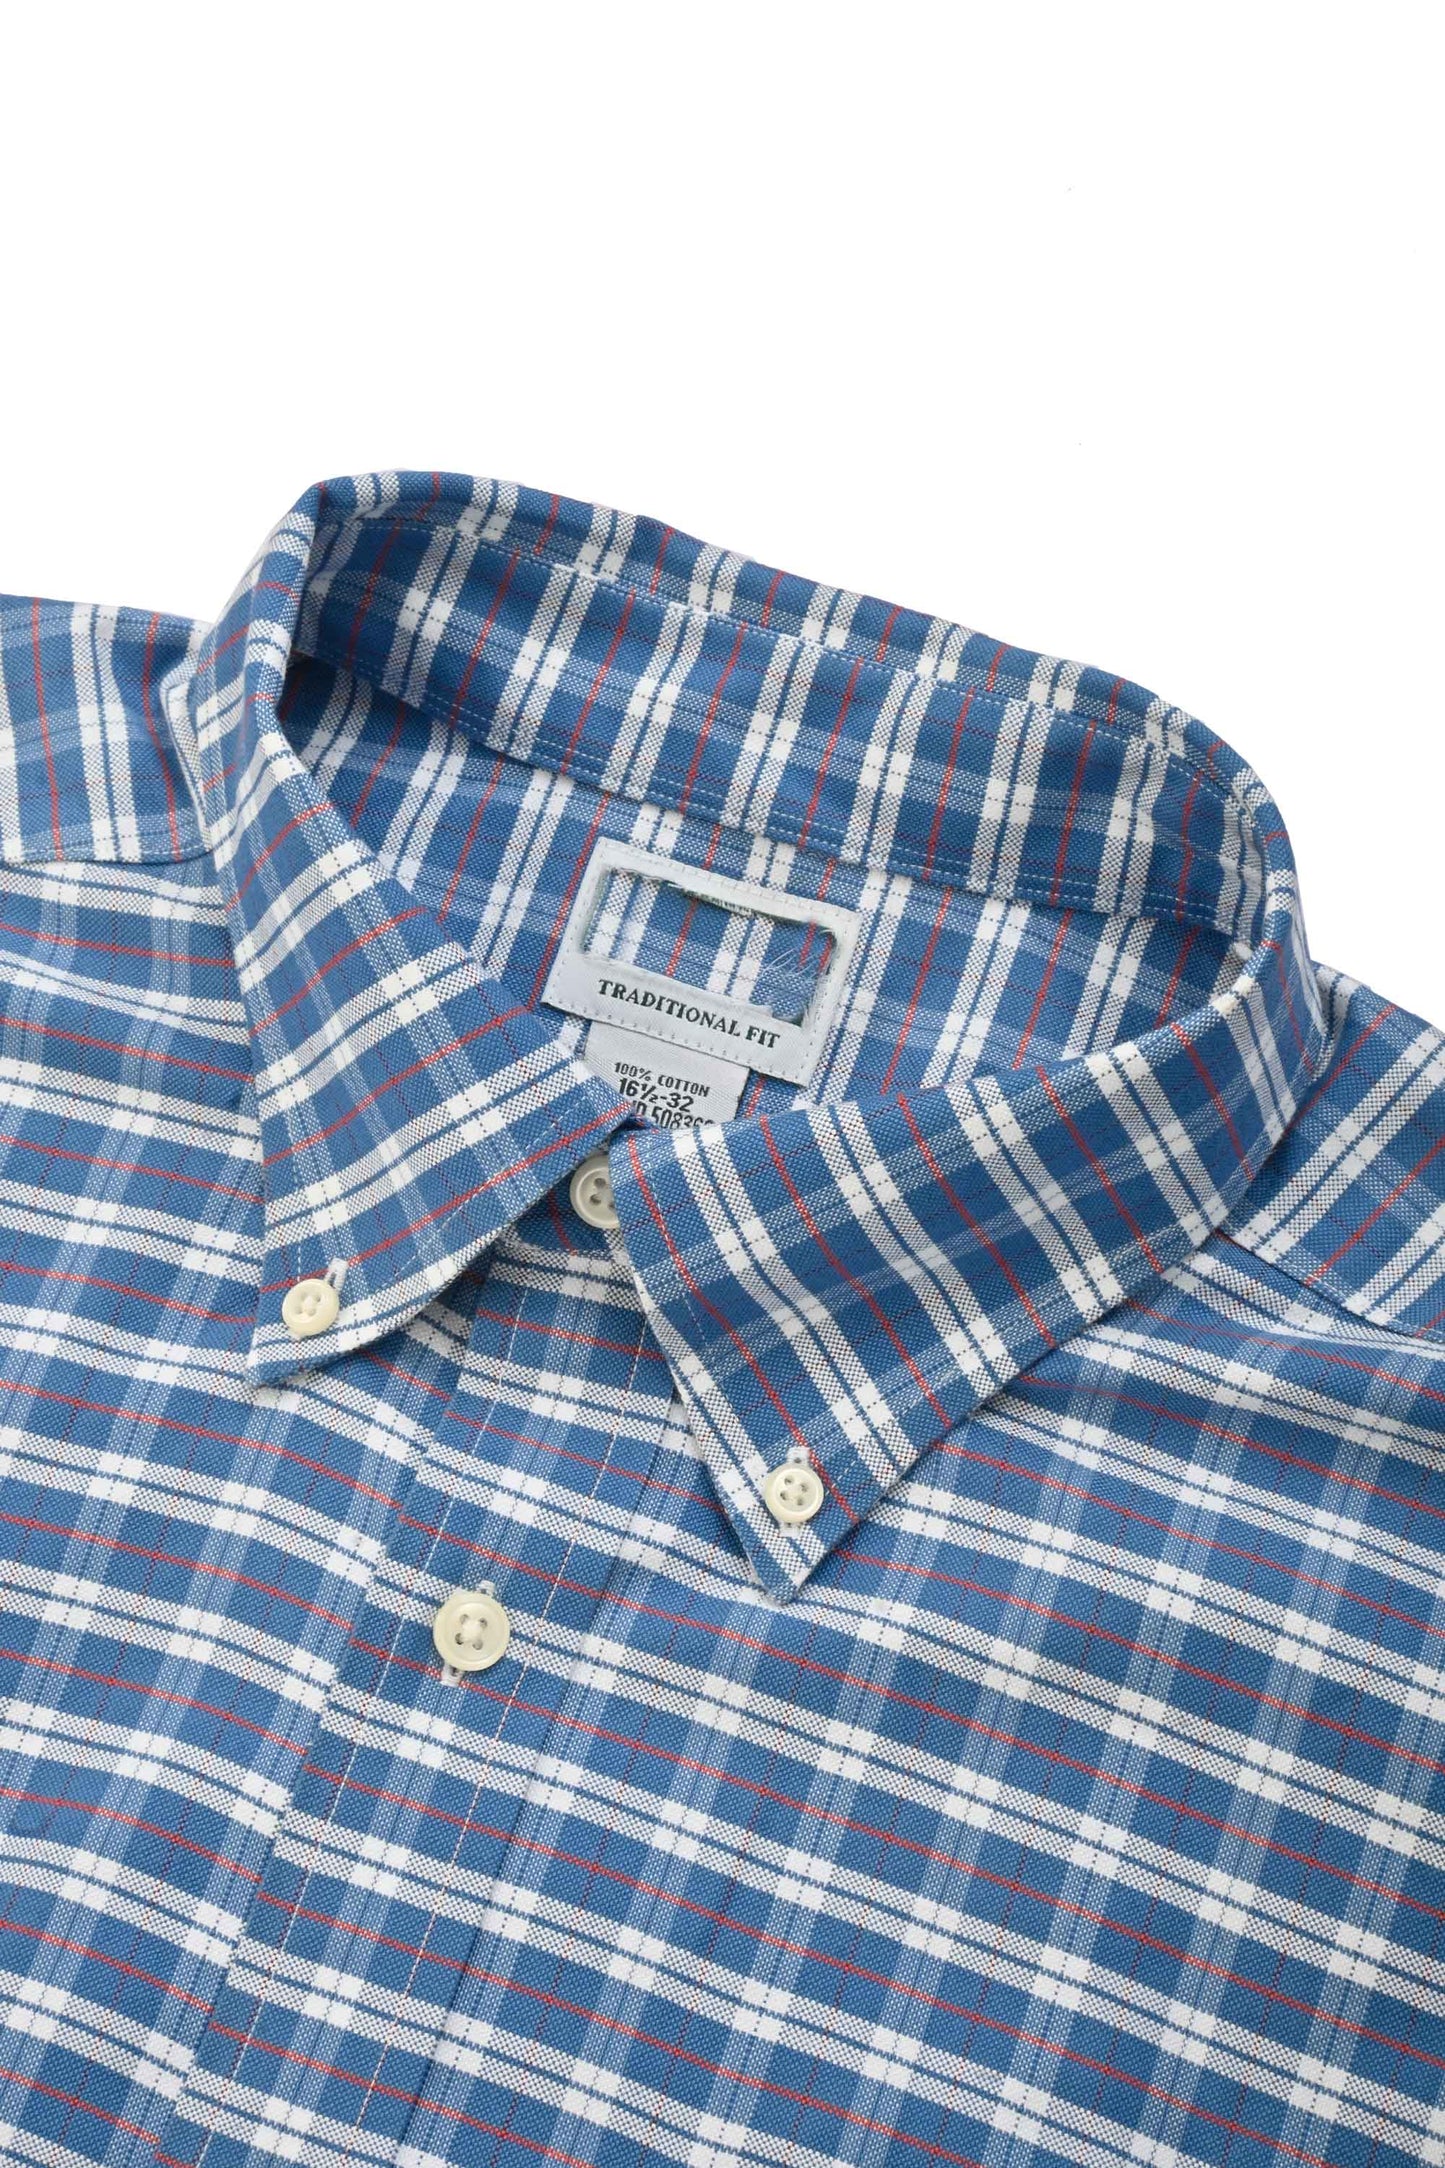 Cut Label Men's Check Style Formal Shirt Men's Casual Shirt First Choice 